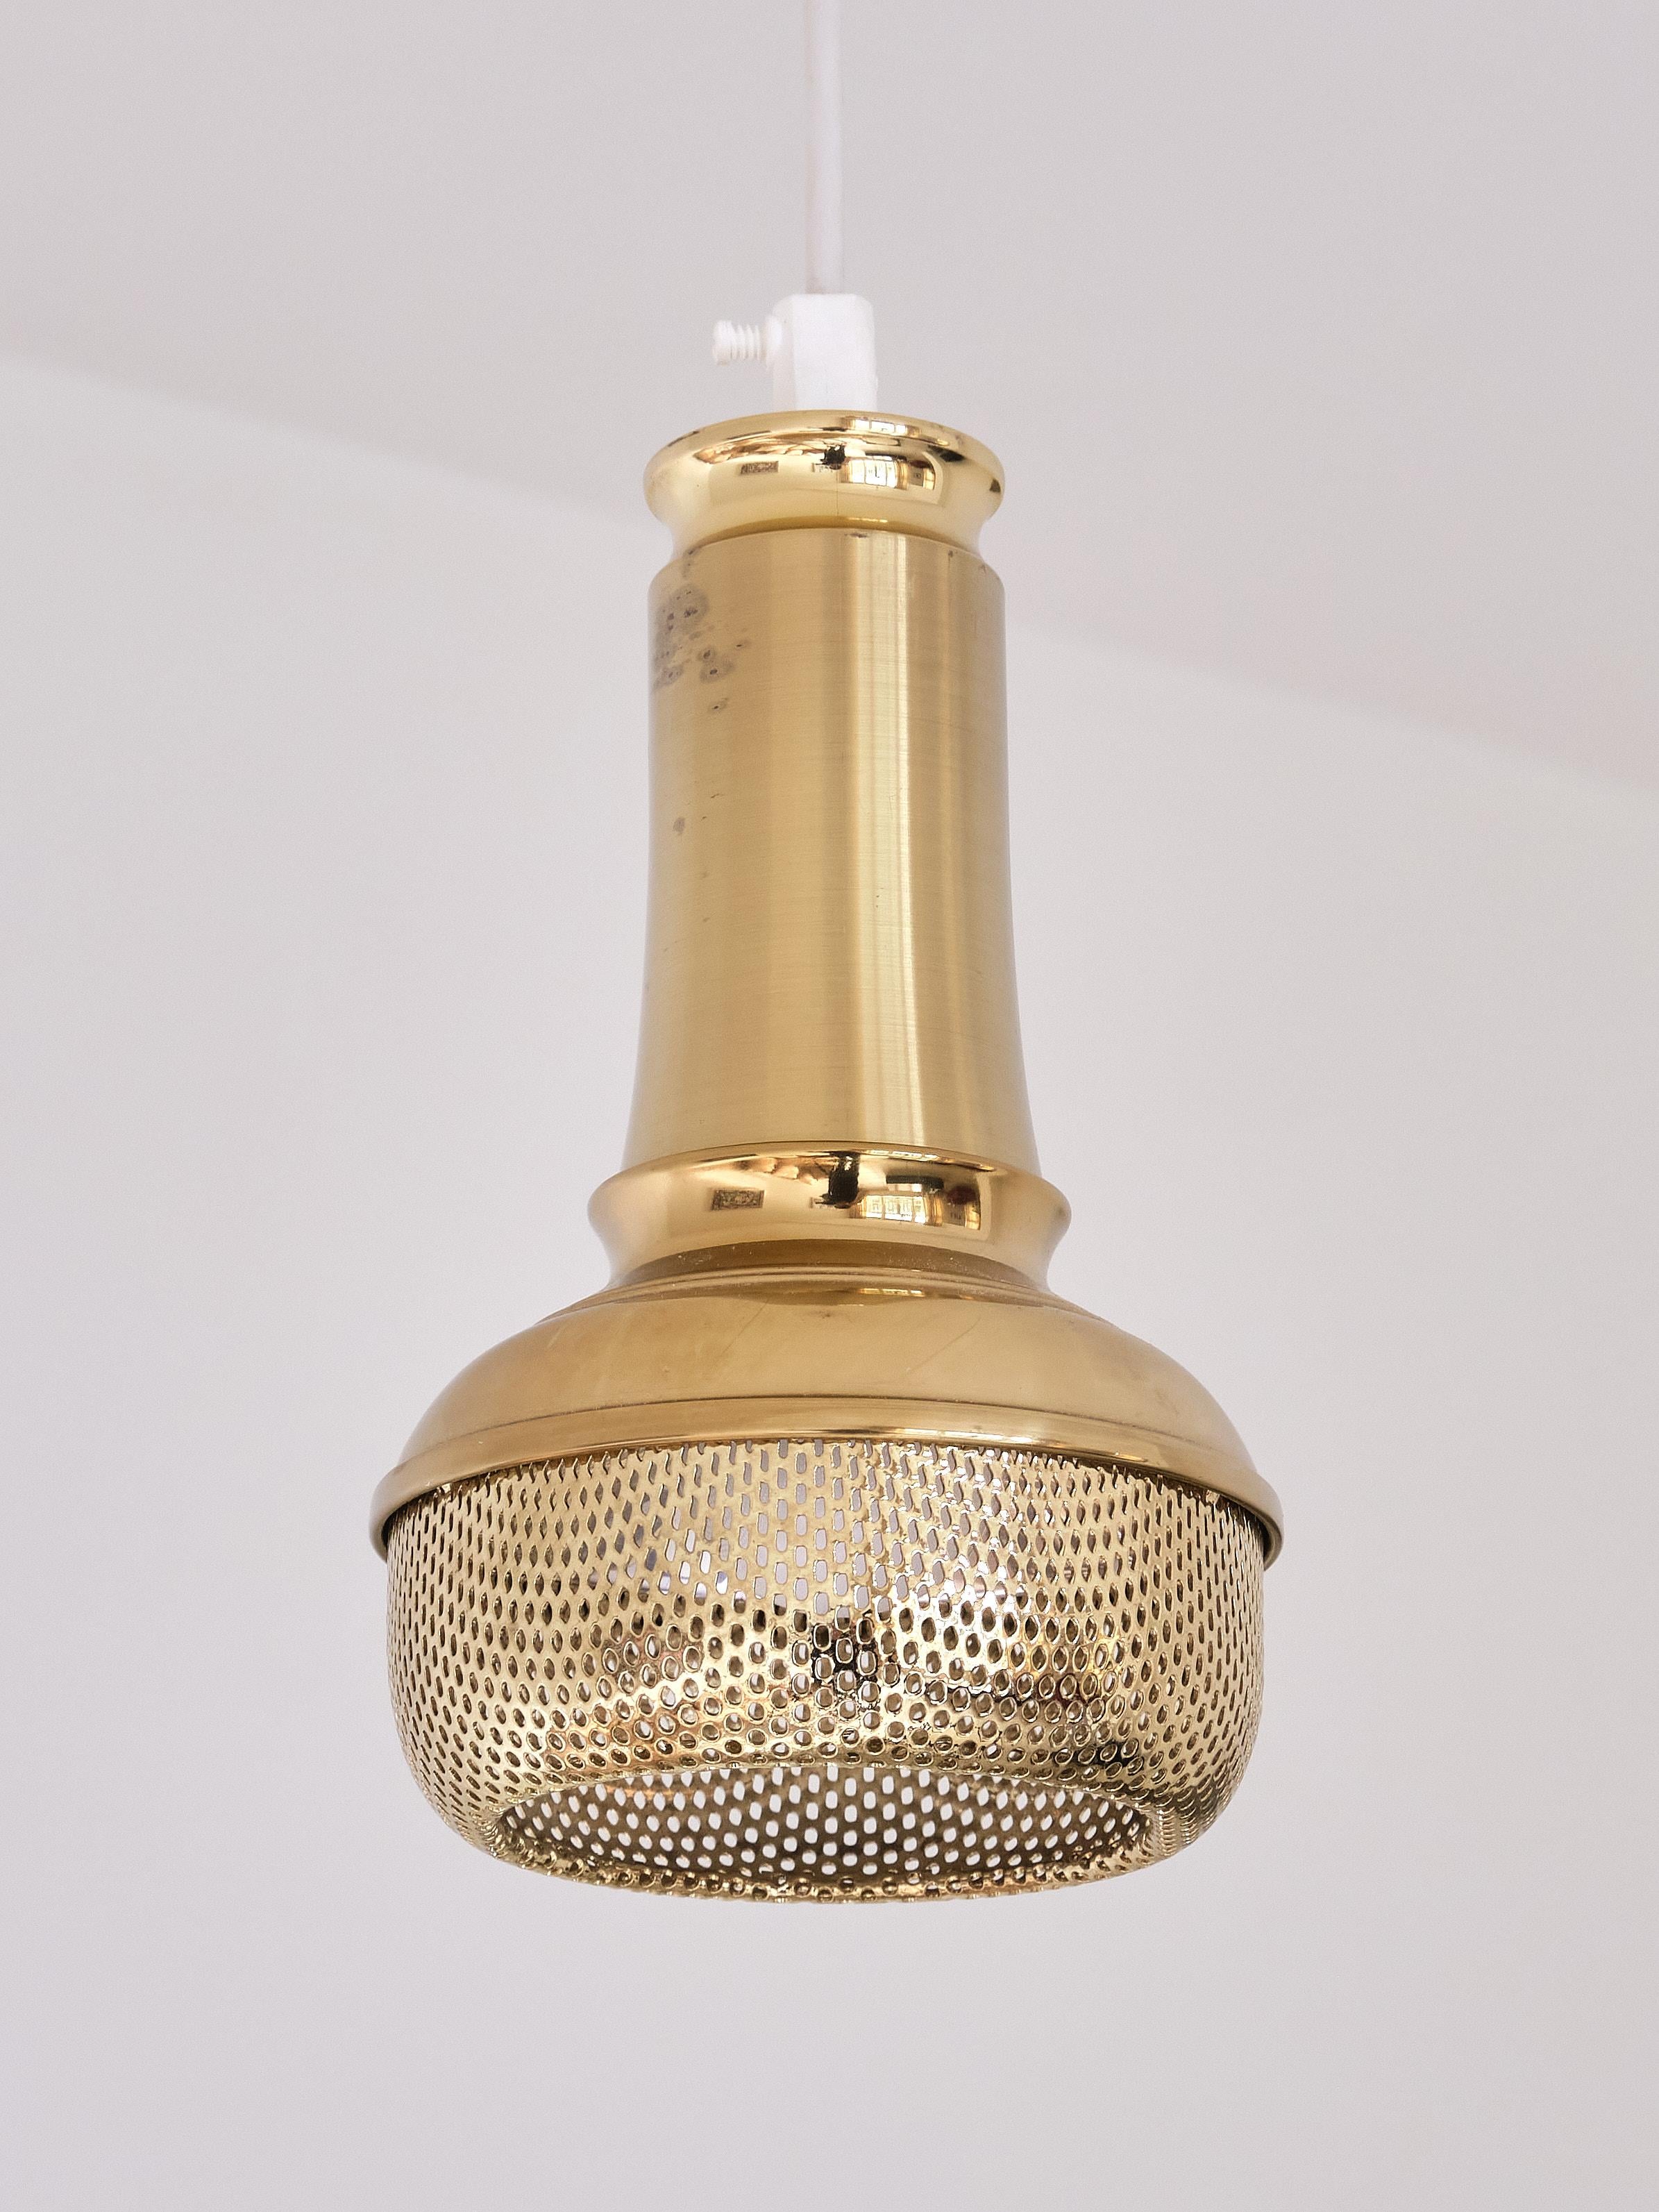 Pair of Scandinavian Modern Brass Pendant Lights, OMI Denmark, 1960s For Sale 5